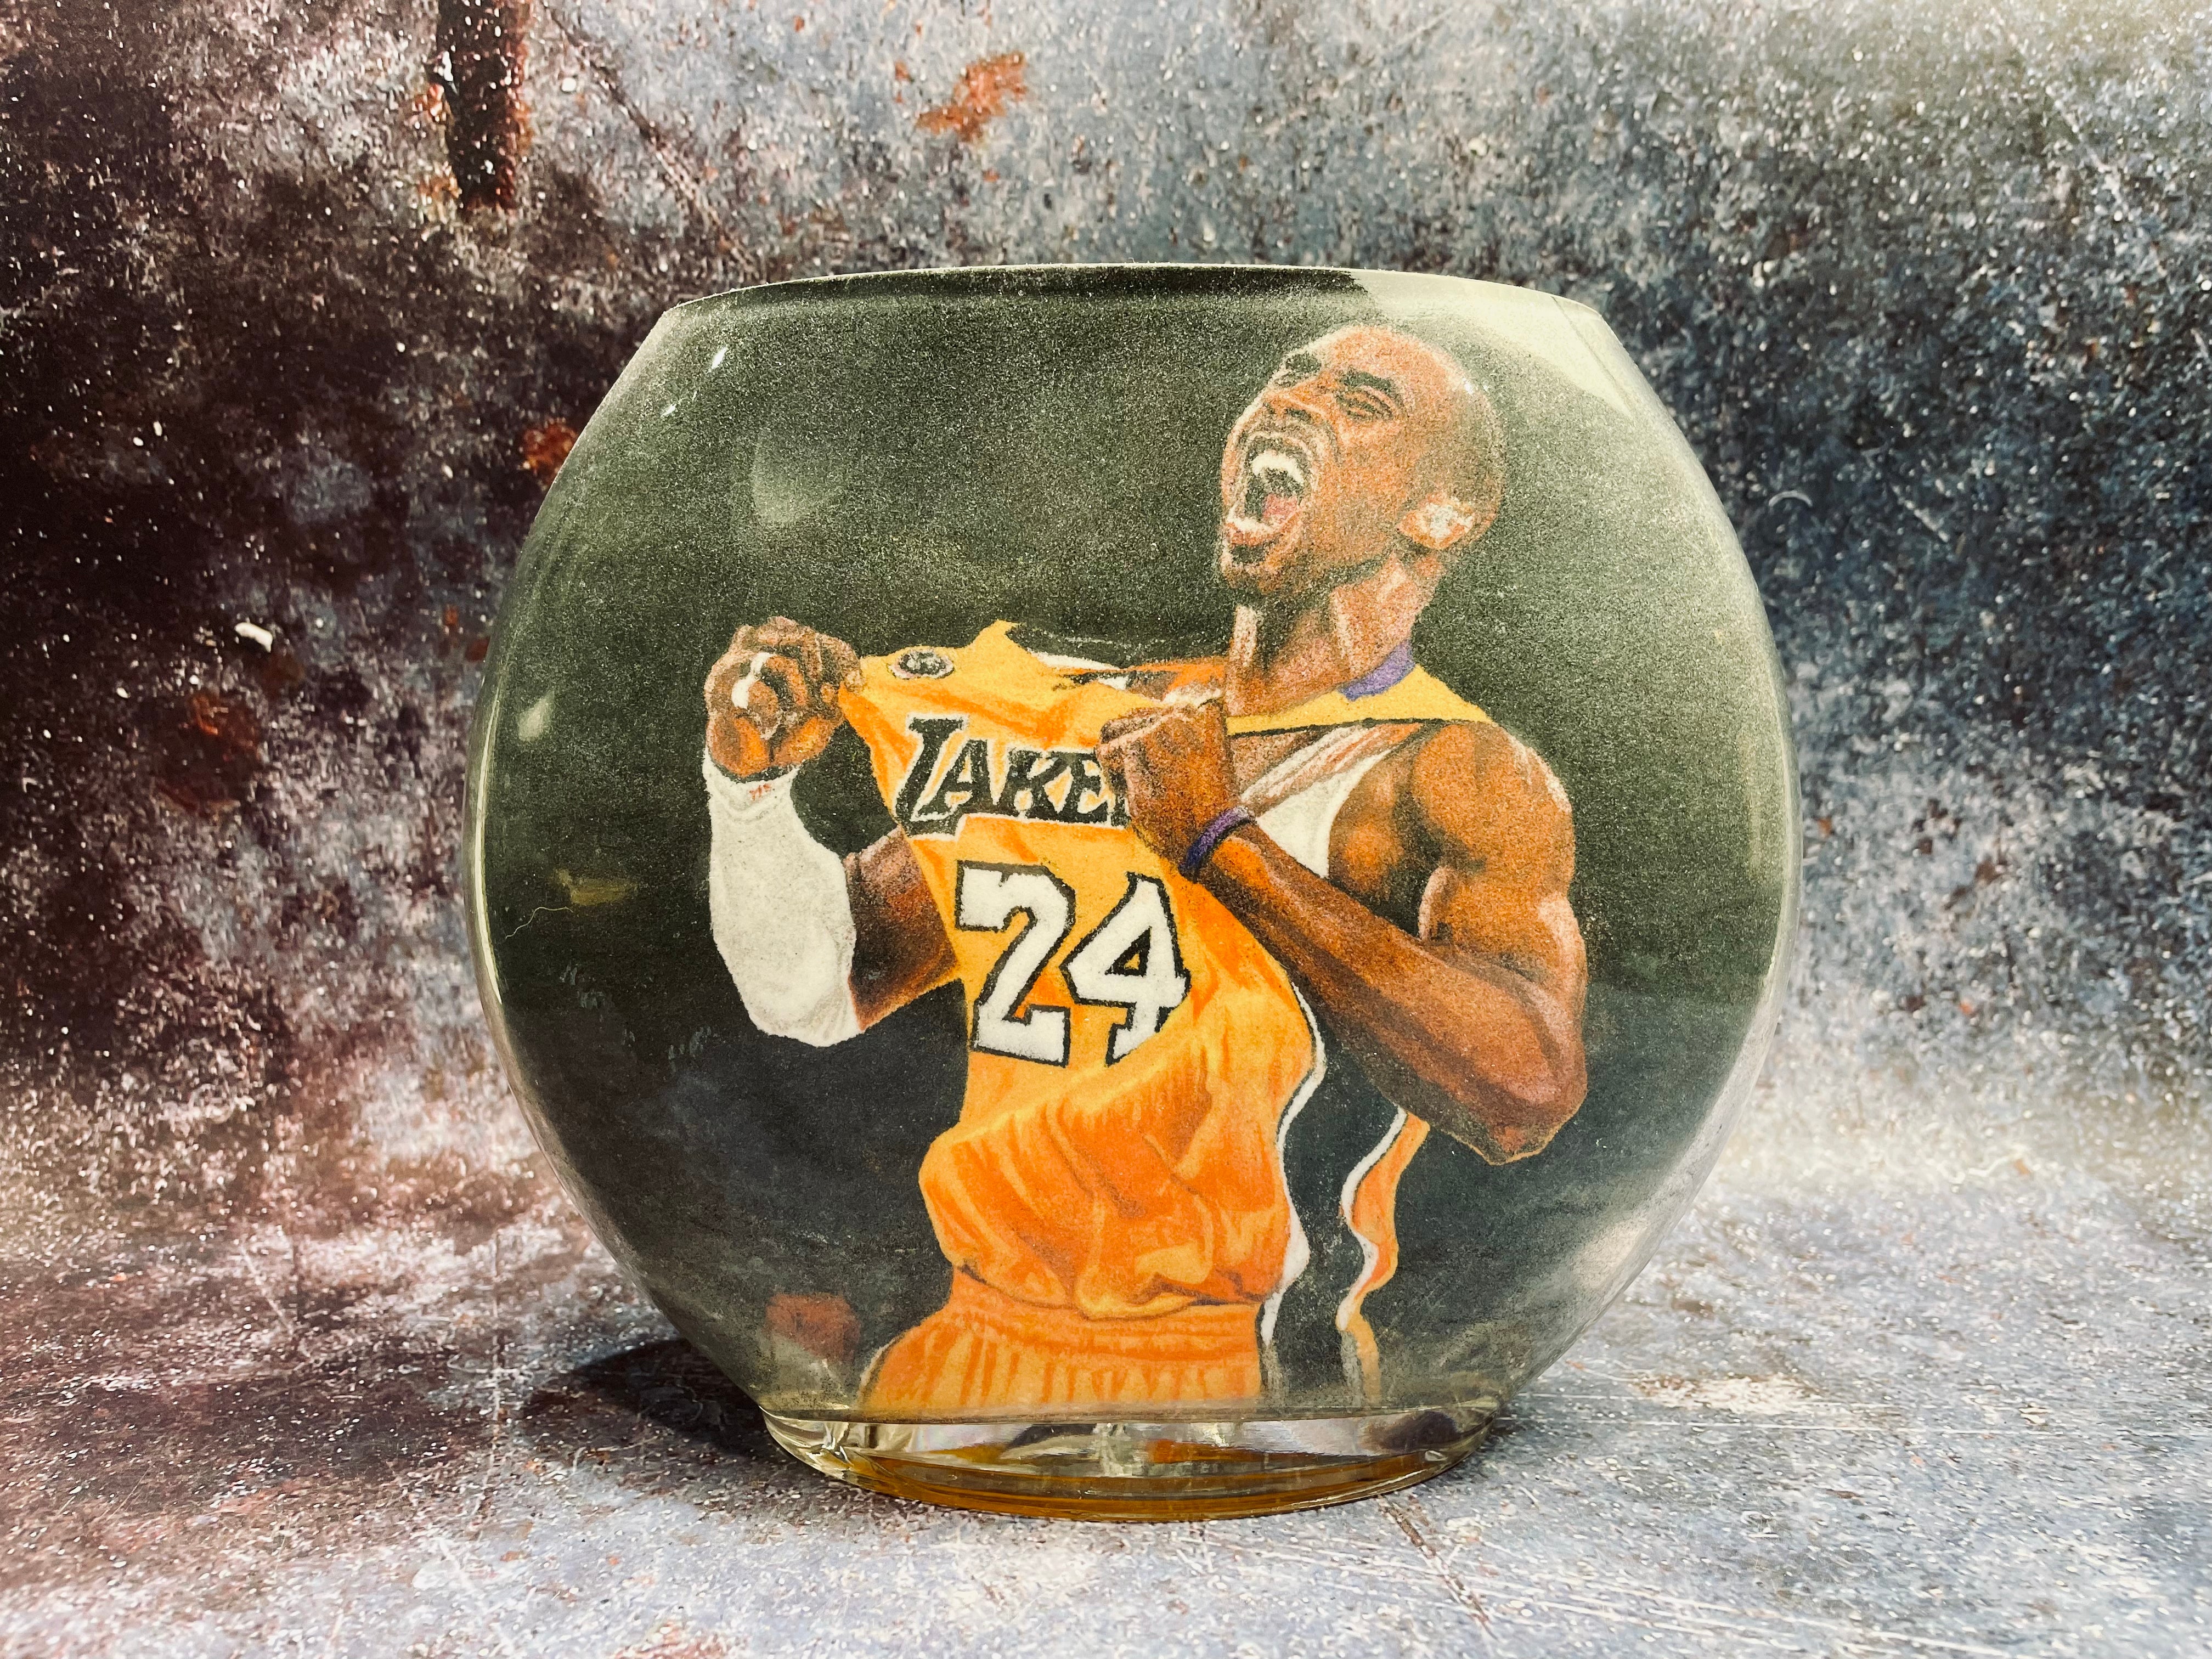 Kobe - Epic Moment of Glory: A Sand Portrait of a Basketball Legend